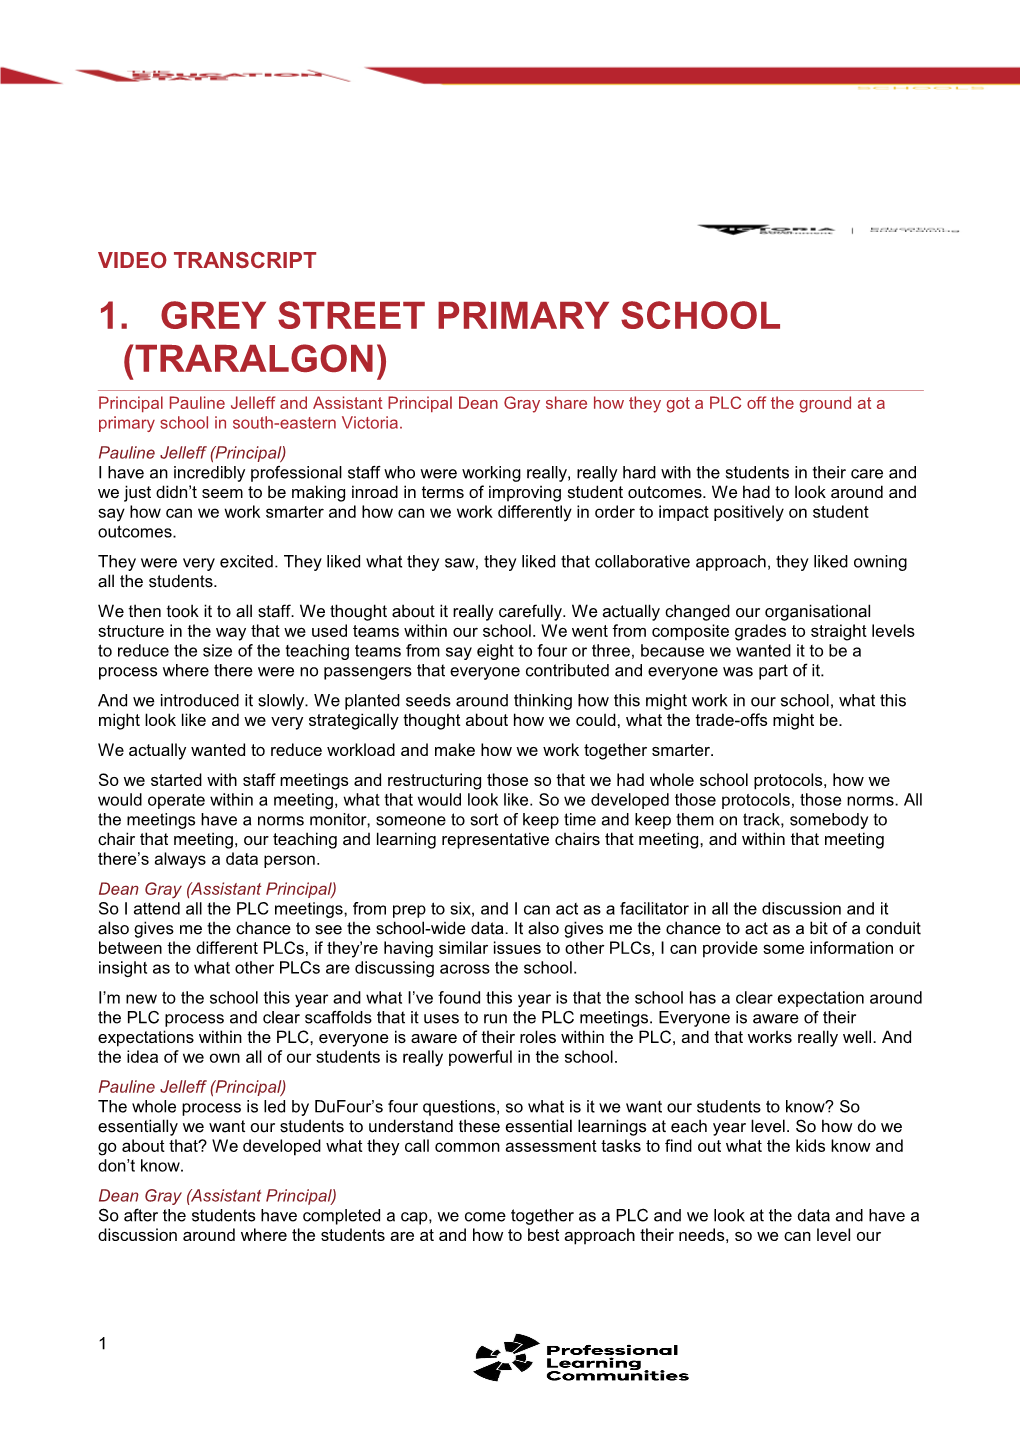 Grey Street Primary School (Traralgon)